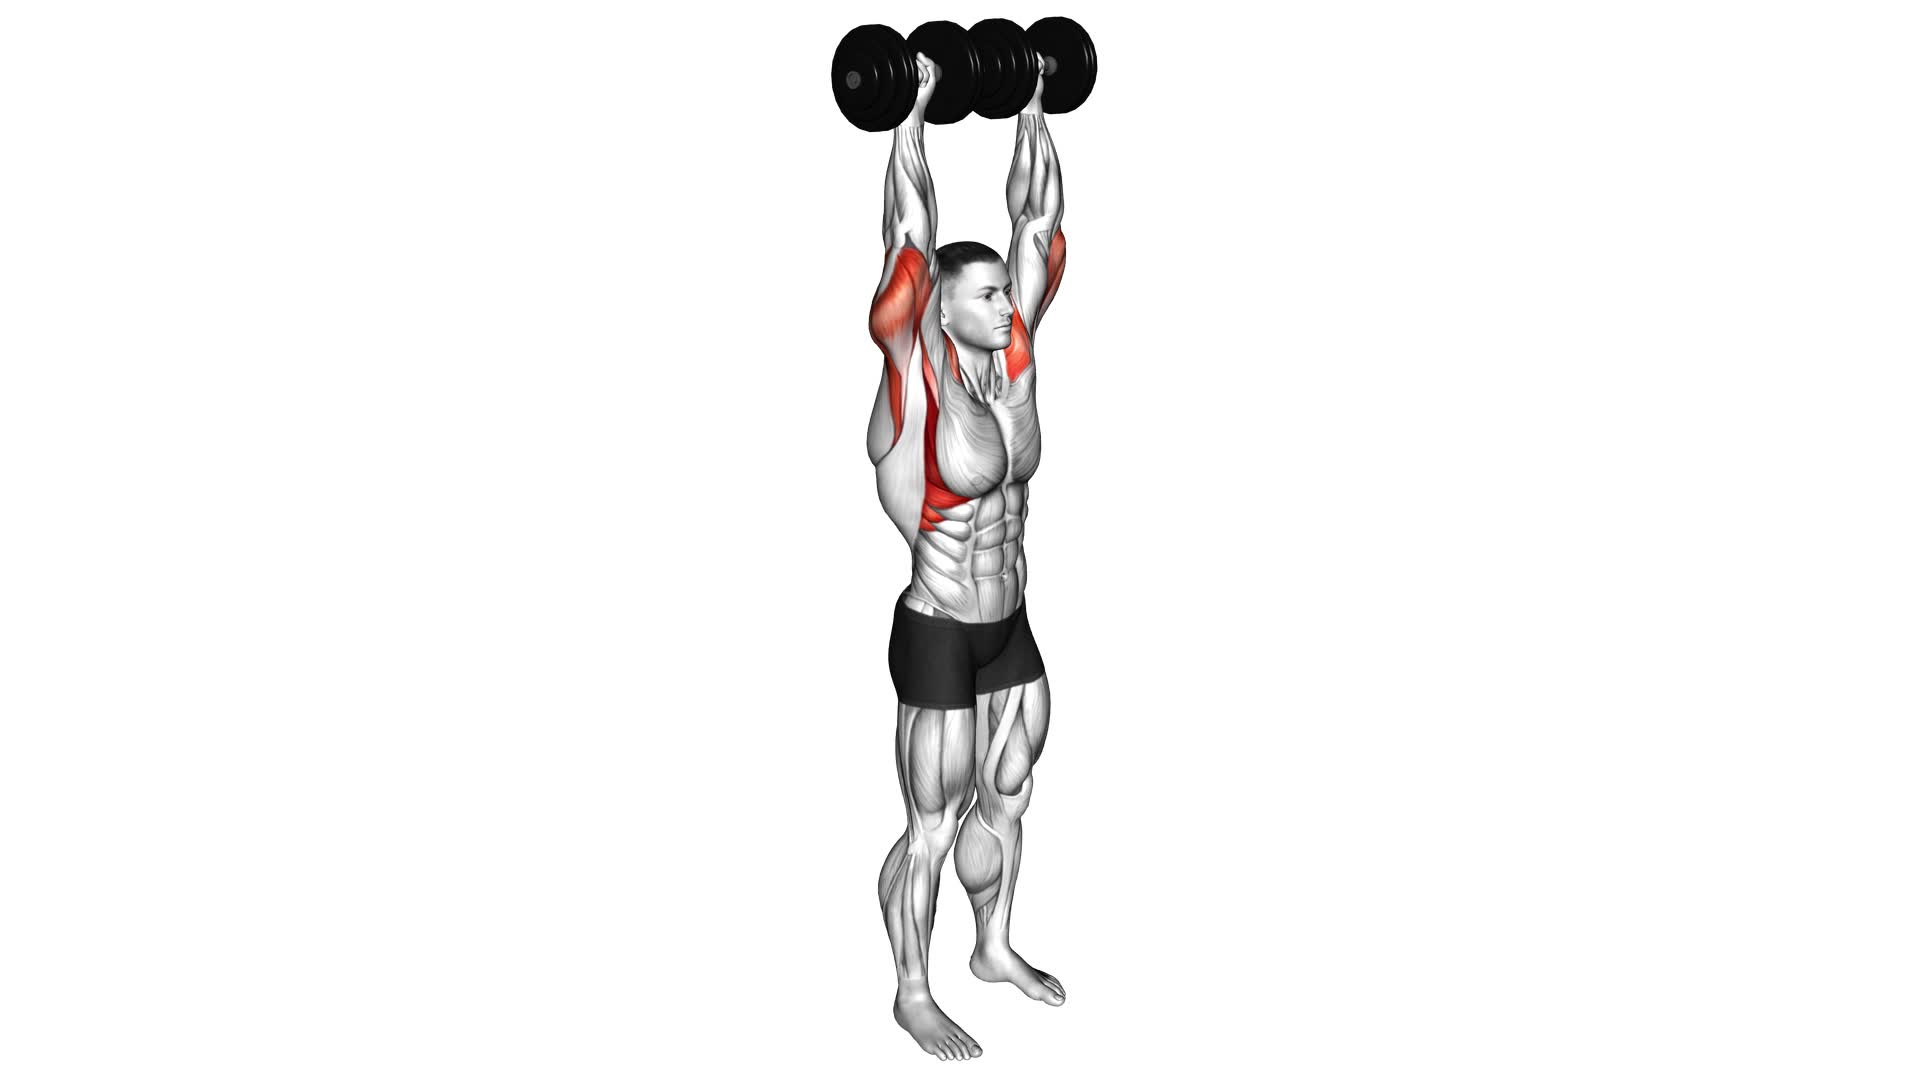 Dumbbell Standing Behind Back Shoulders Press - Video Exercise Guide & Tips